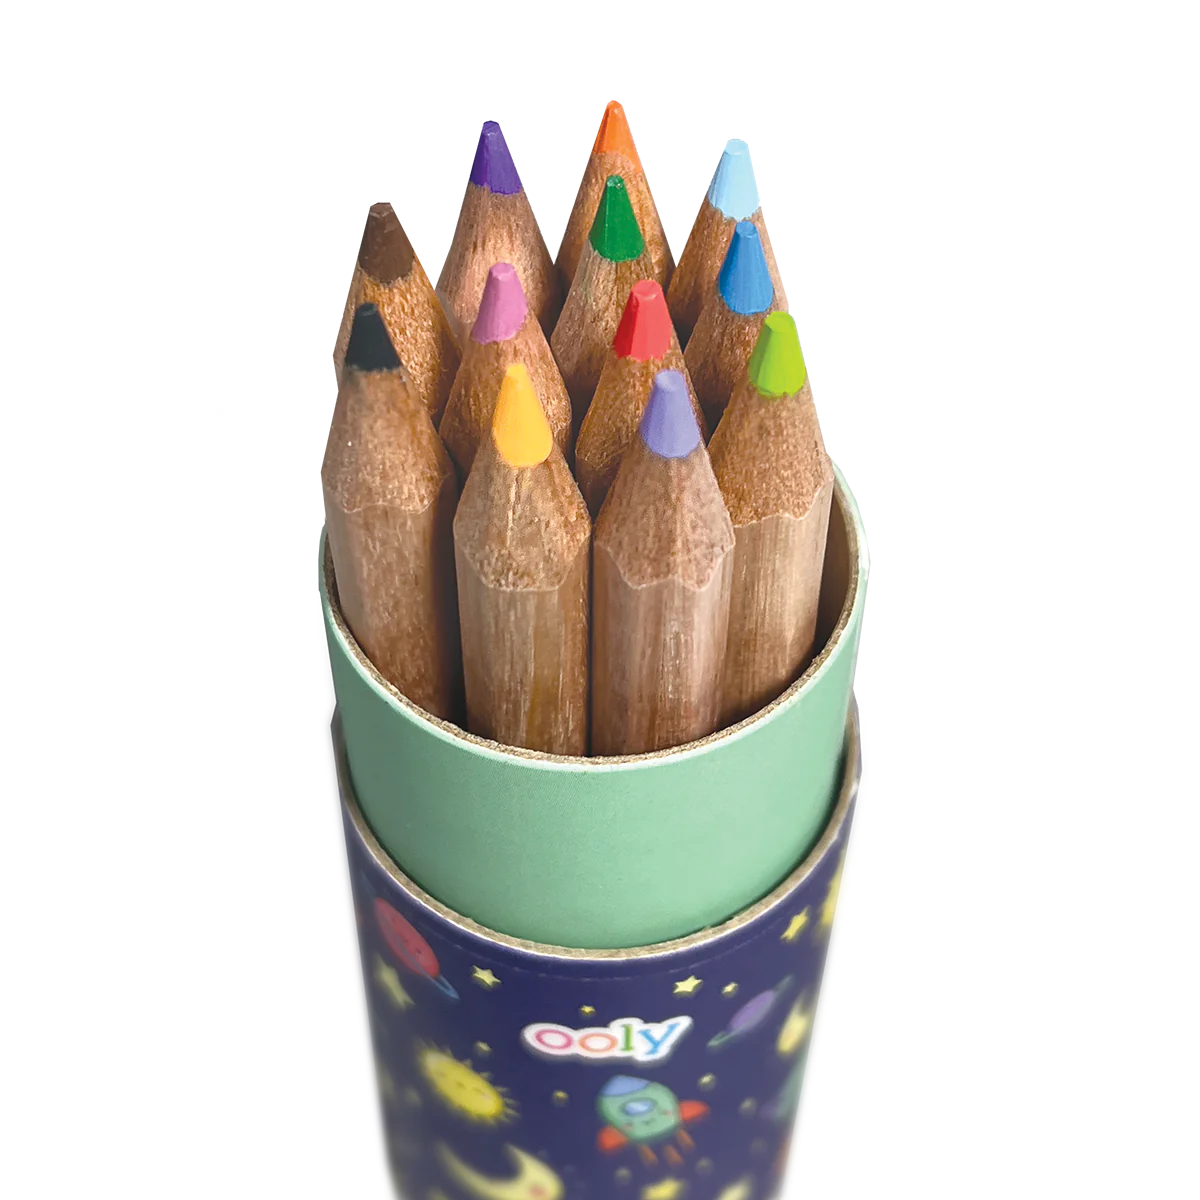 Draw ‘n Doodle Mini Colored Pencils & Sharpener